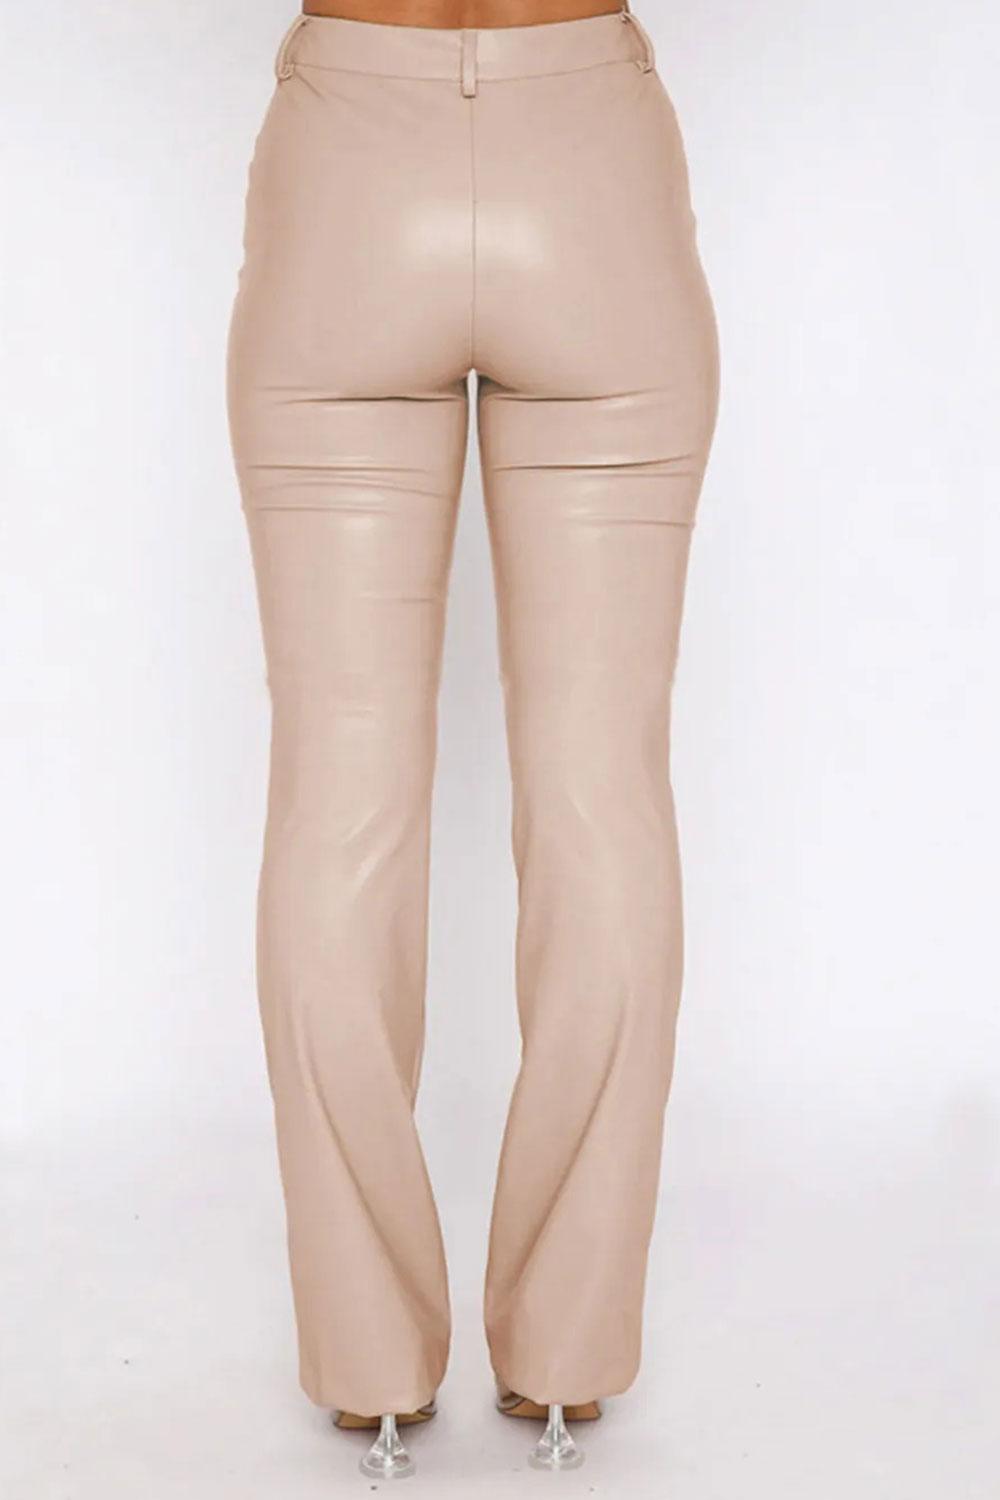 Buy PU Leather High Waist Straight Pants on Sale - Daily Fashion